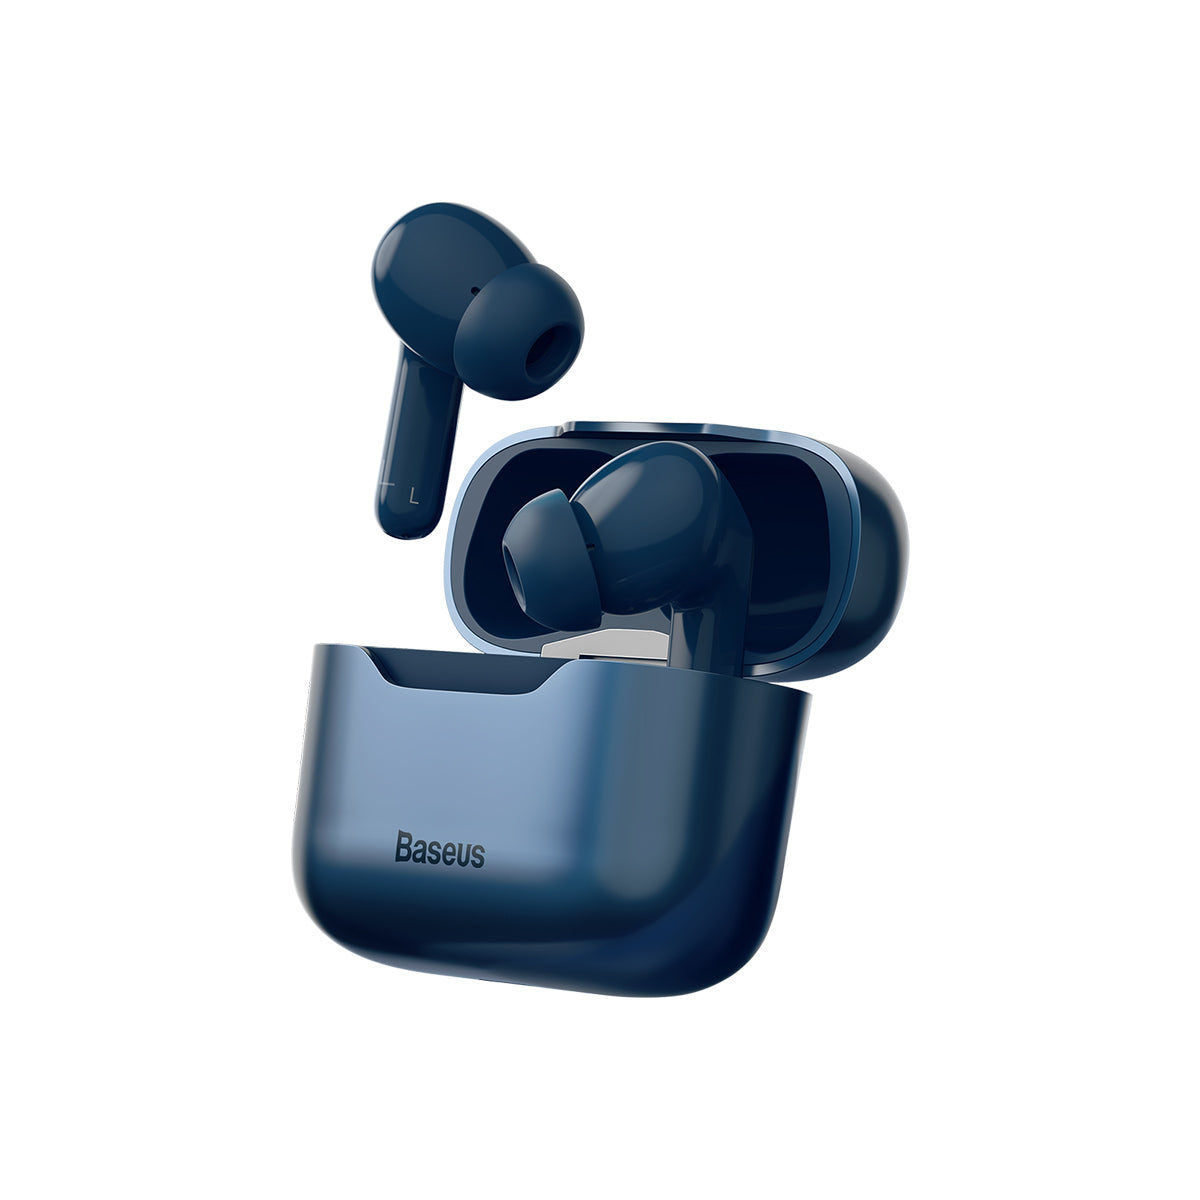 Baseus SIMU S1 Pro ANC TWS Wireless Bluetooth Earbuds